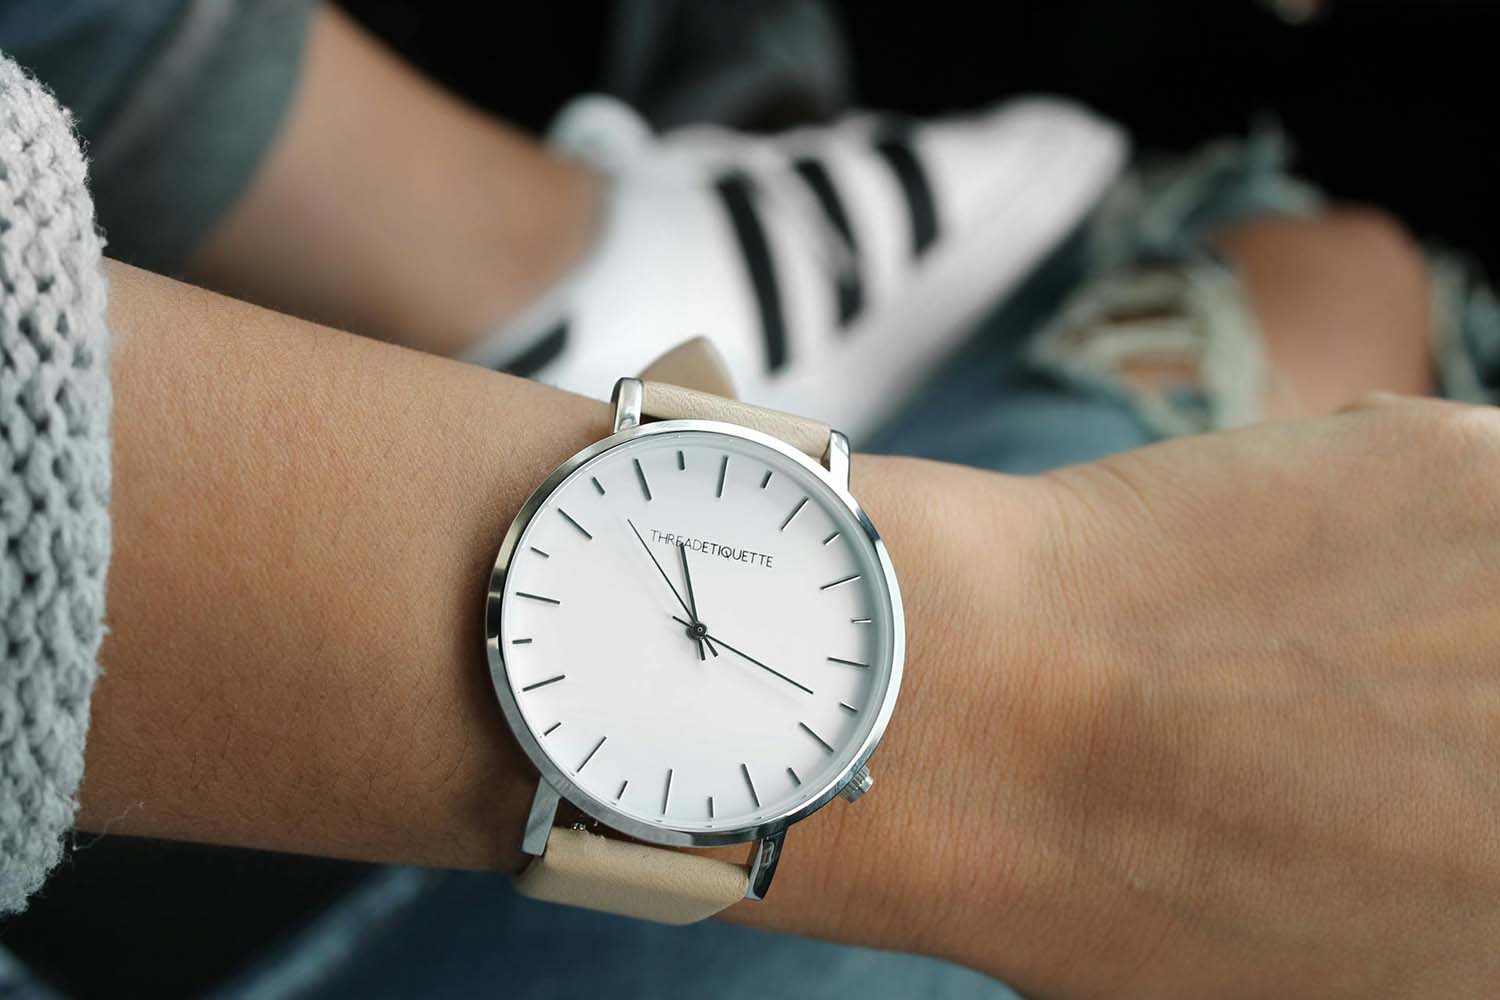 A watch on someone's wrist